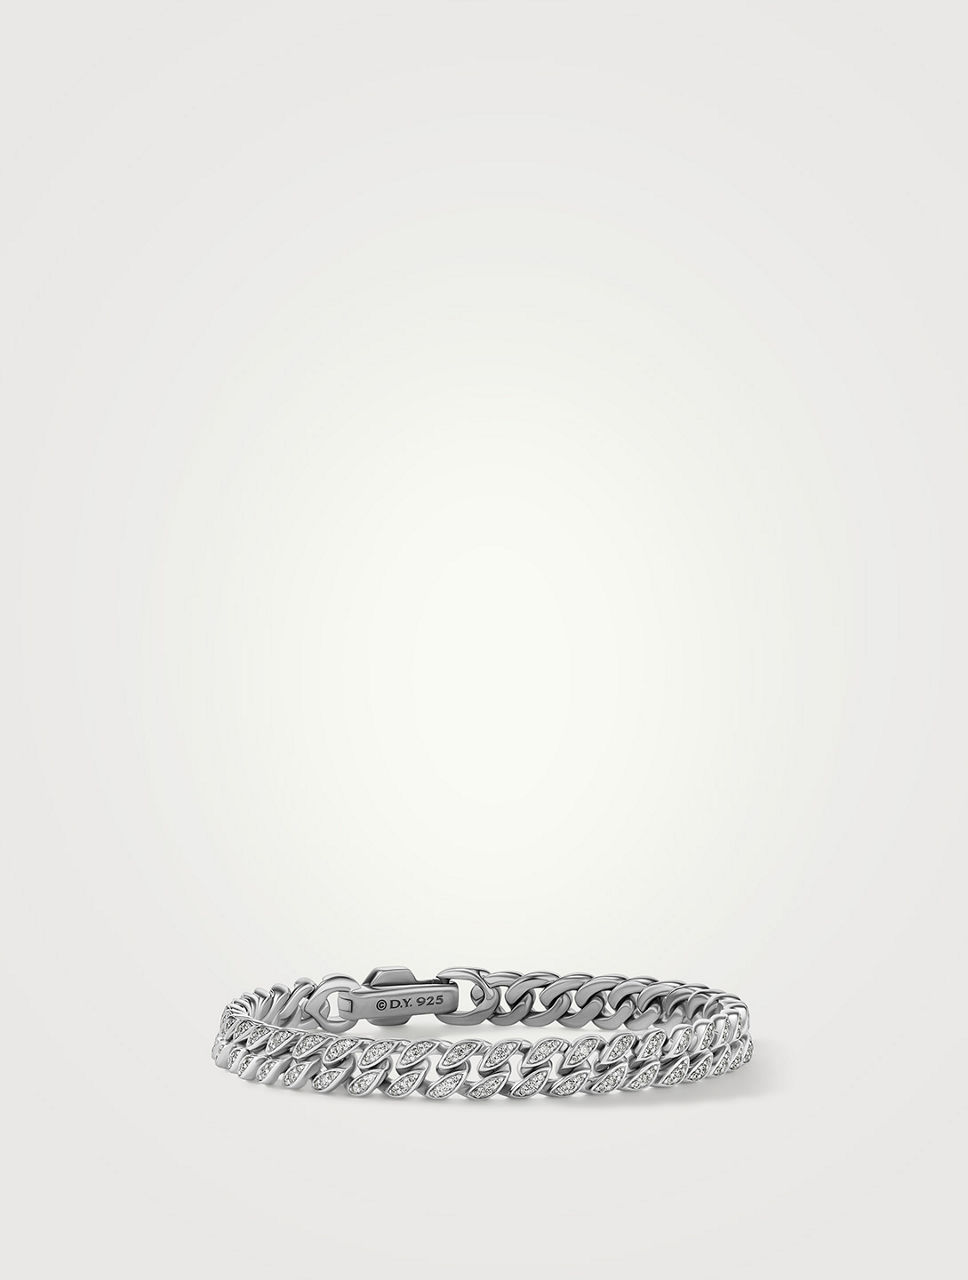 Curb Chain Bracelet Sterling Silver With Pavé Diamonds